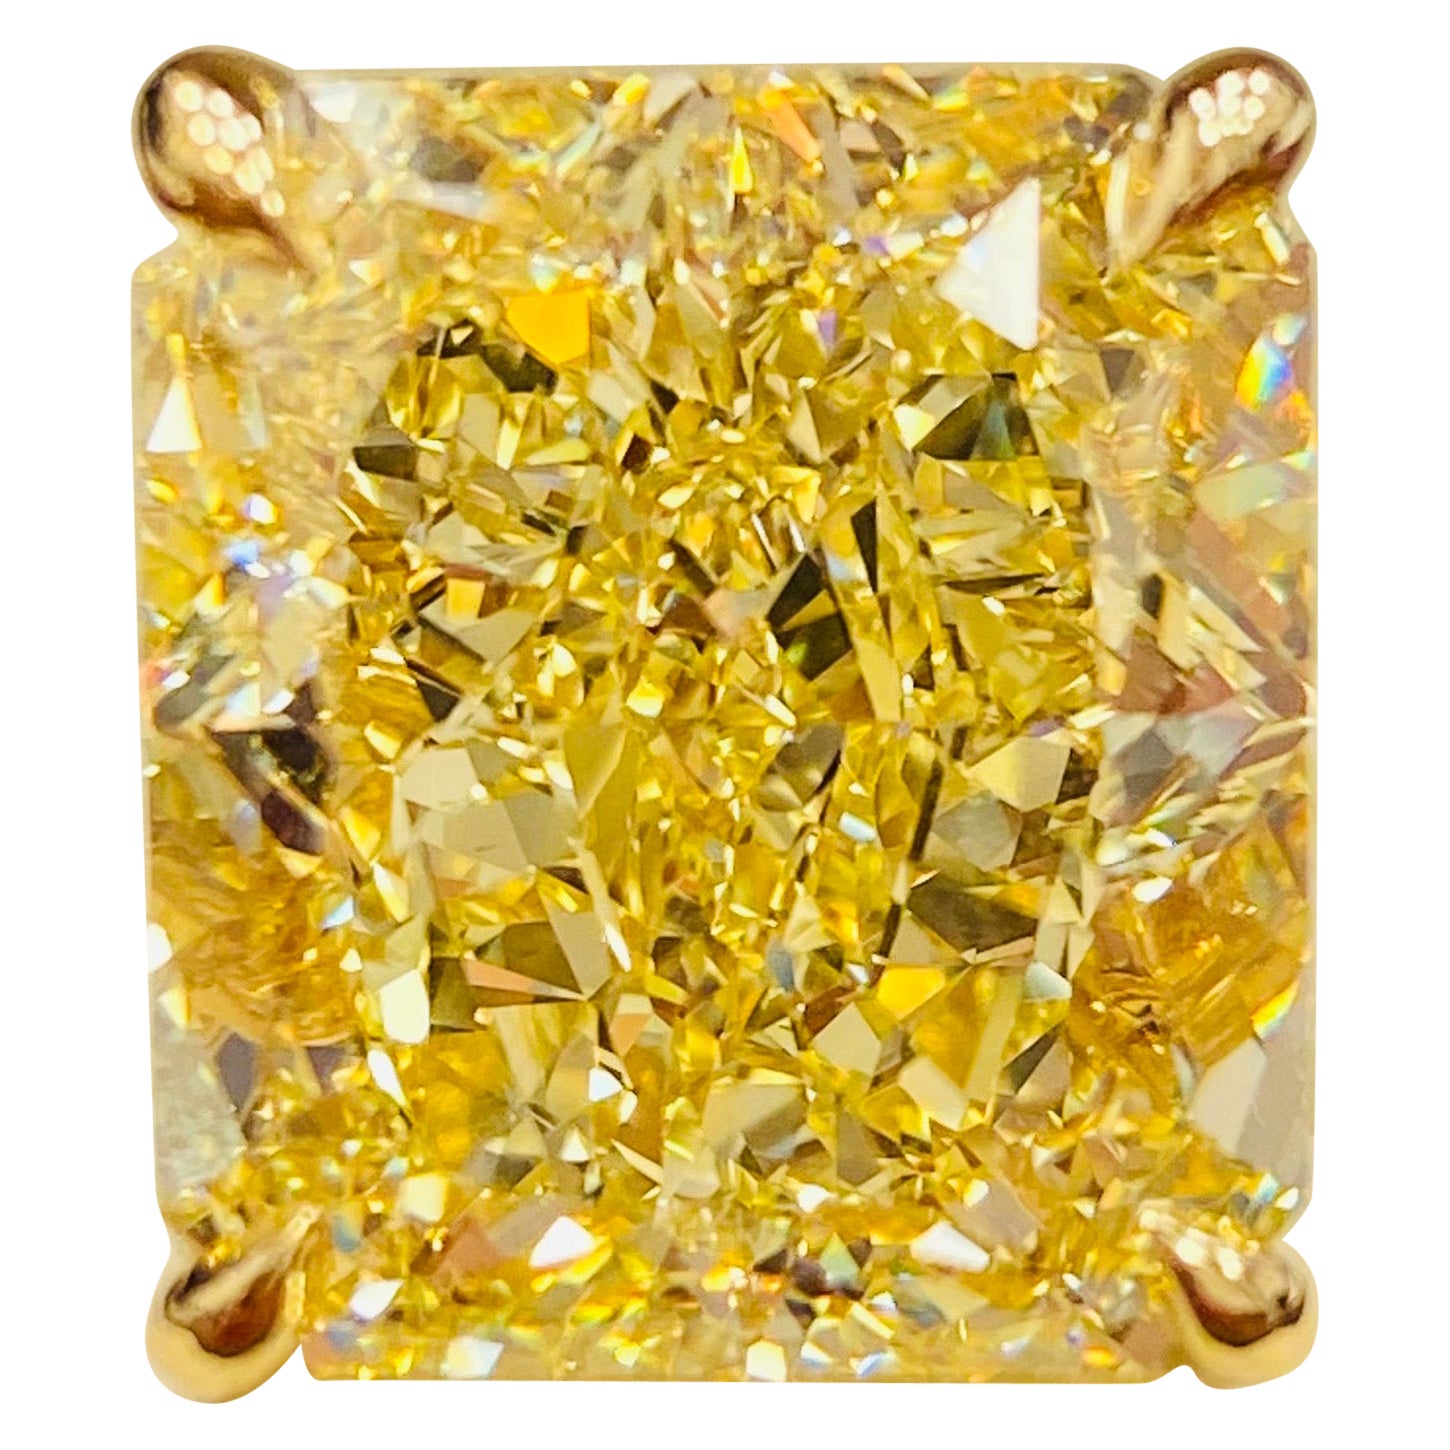 Emilio Jewelry GIA Certified 41.00 Carat Fancy Intense Yellow Diamond Ring (bague en diamant jaune intense certifié GIA)